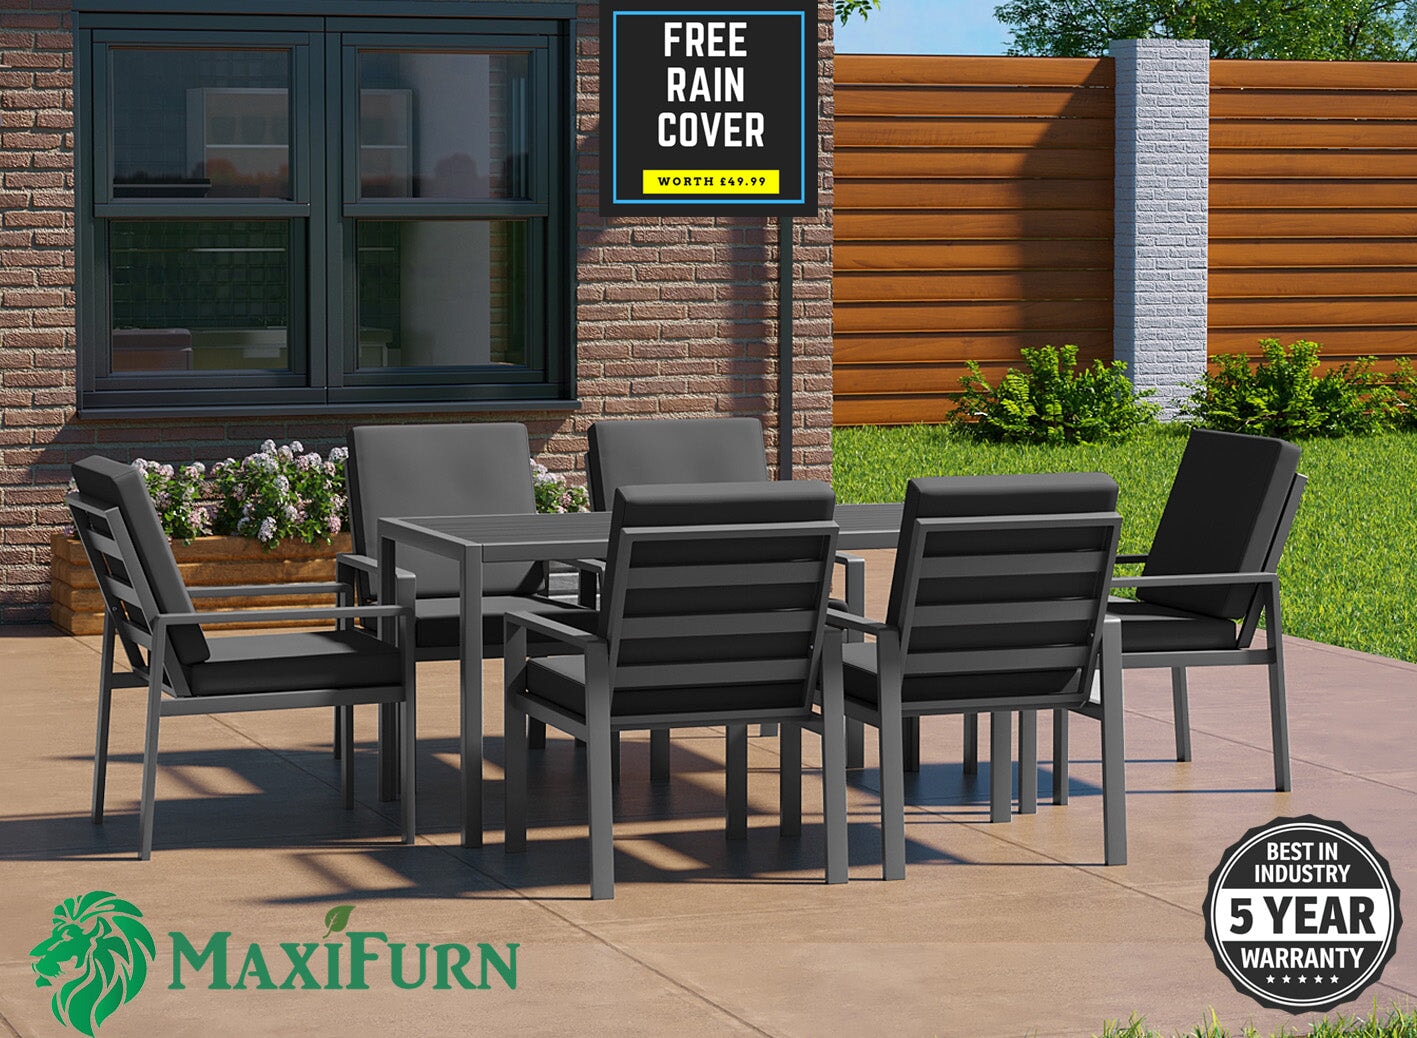 Aluminium Dining Table & 6 Chairs Set - Grey / Dark Rattan Furniture MaxiFurn 